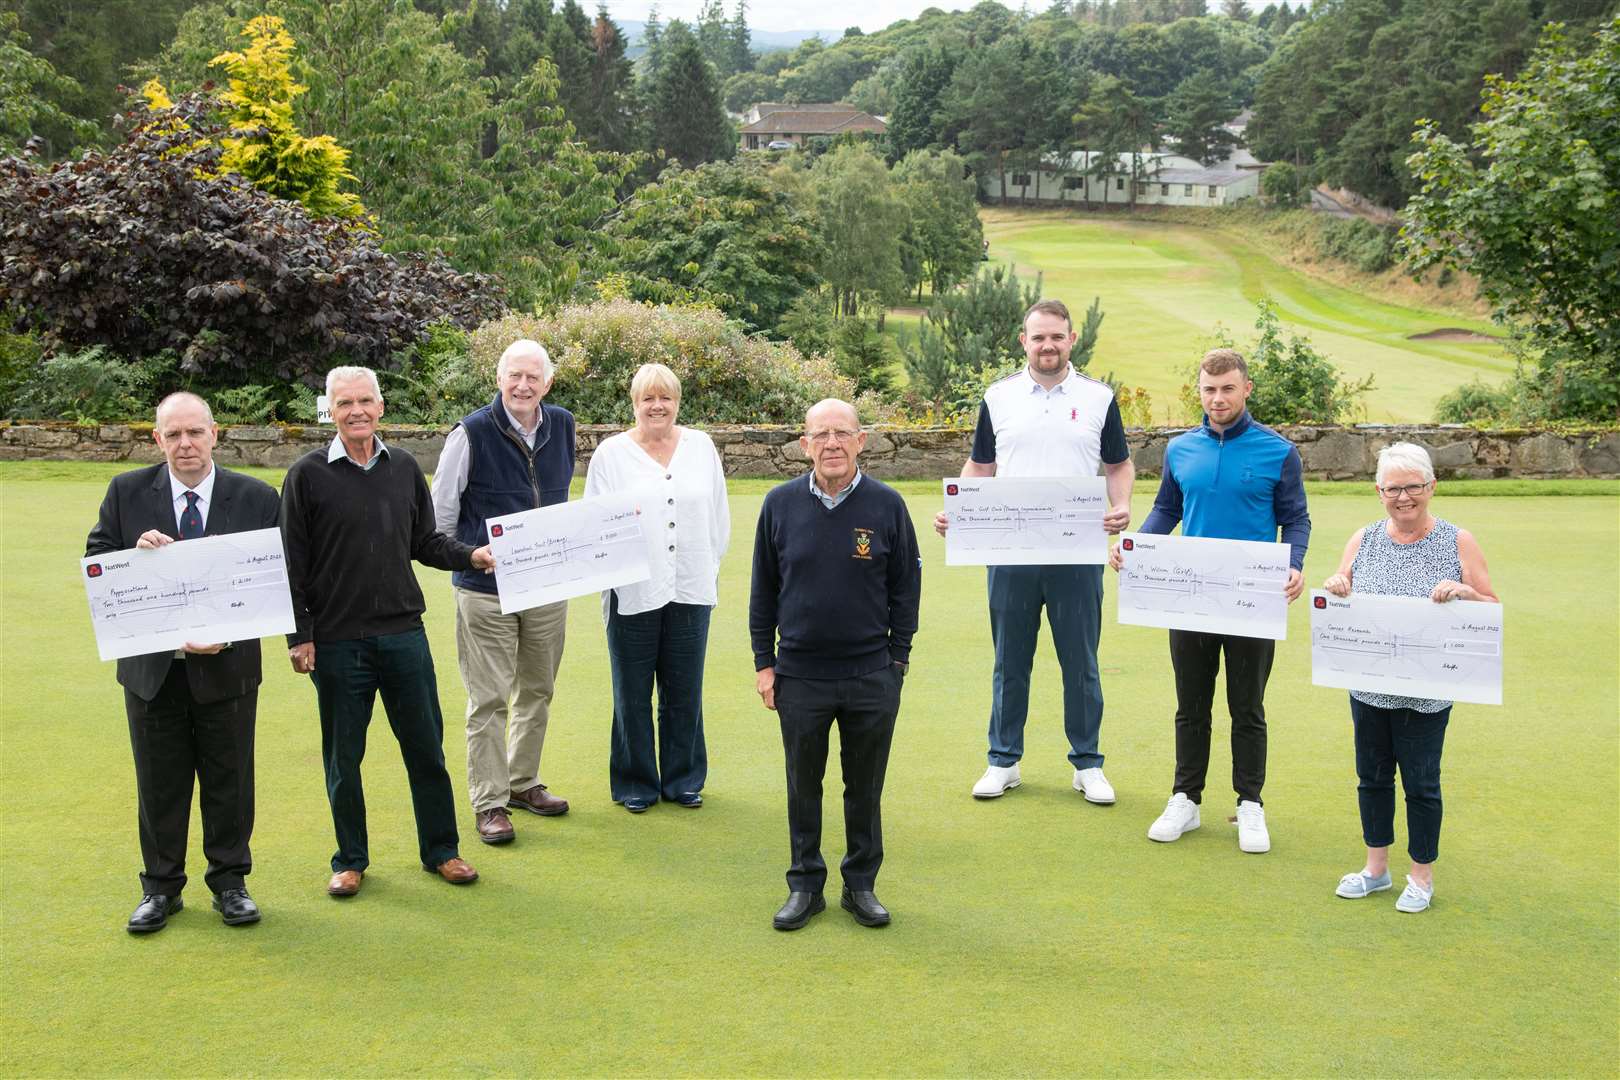 Michael Jamieson (Poppy Scotland), Graham Hilditch, Seymour Munro and Jo Lenihan (Leanchoil Trust), Albert Duffus, Sean Blacklaw (Forres Golf Club), Matty Wilson (amateur golfer) and Sheena Duffus (on behalf of Cancer Research).